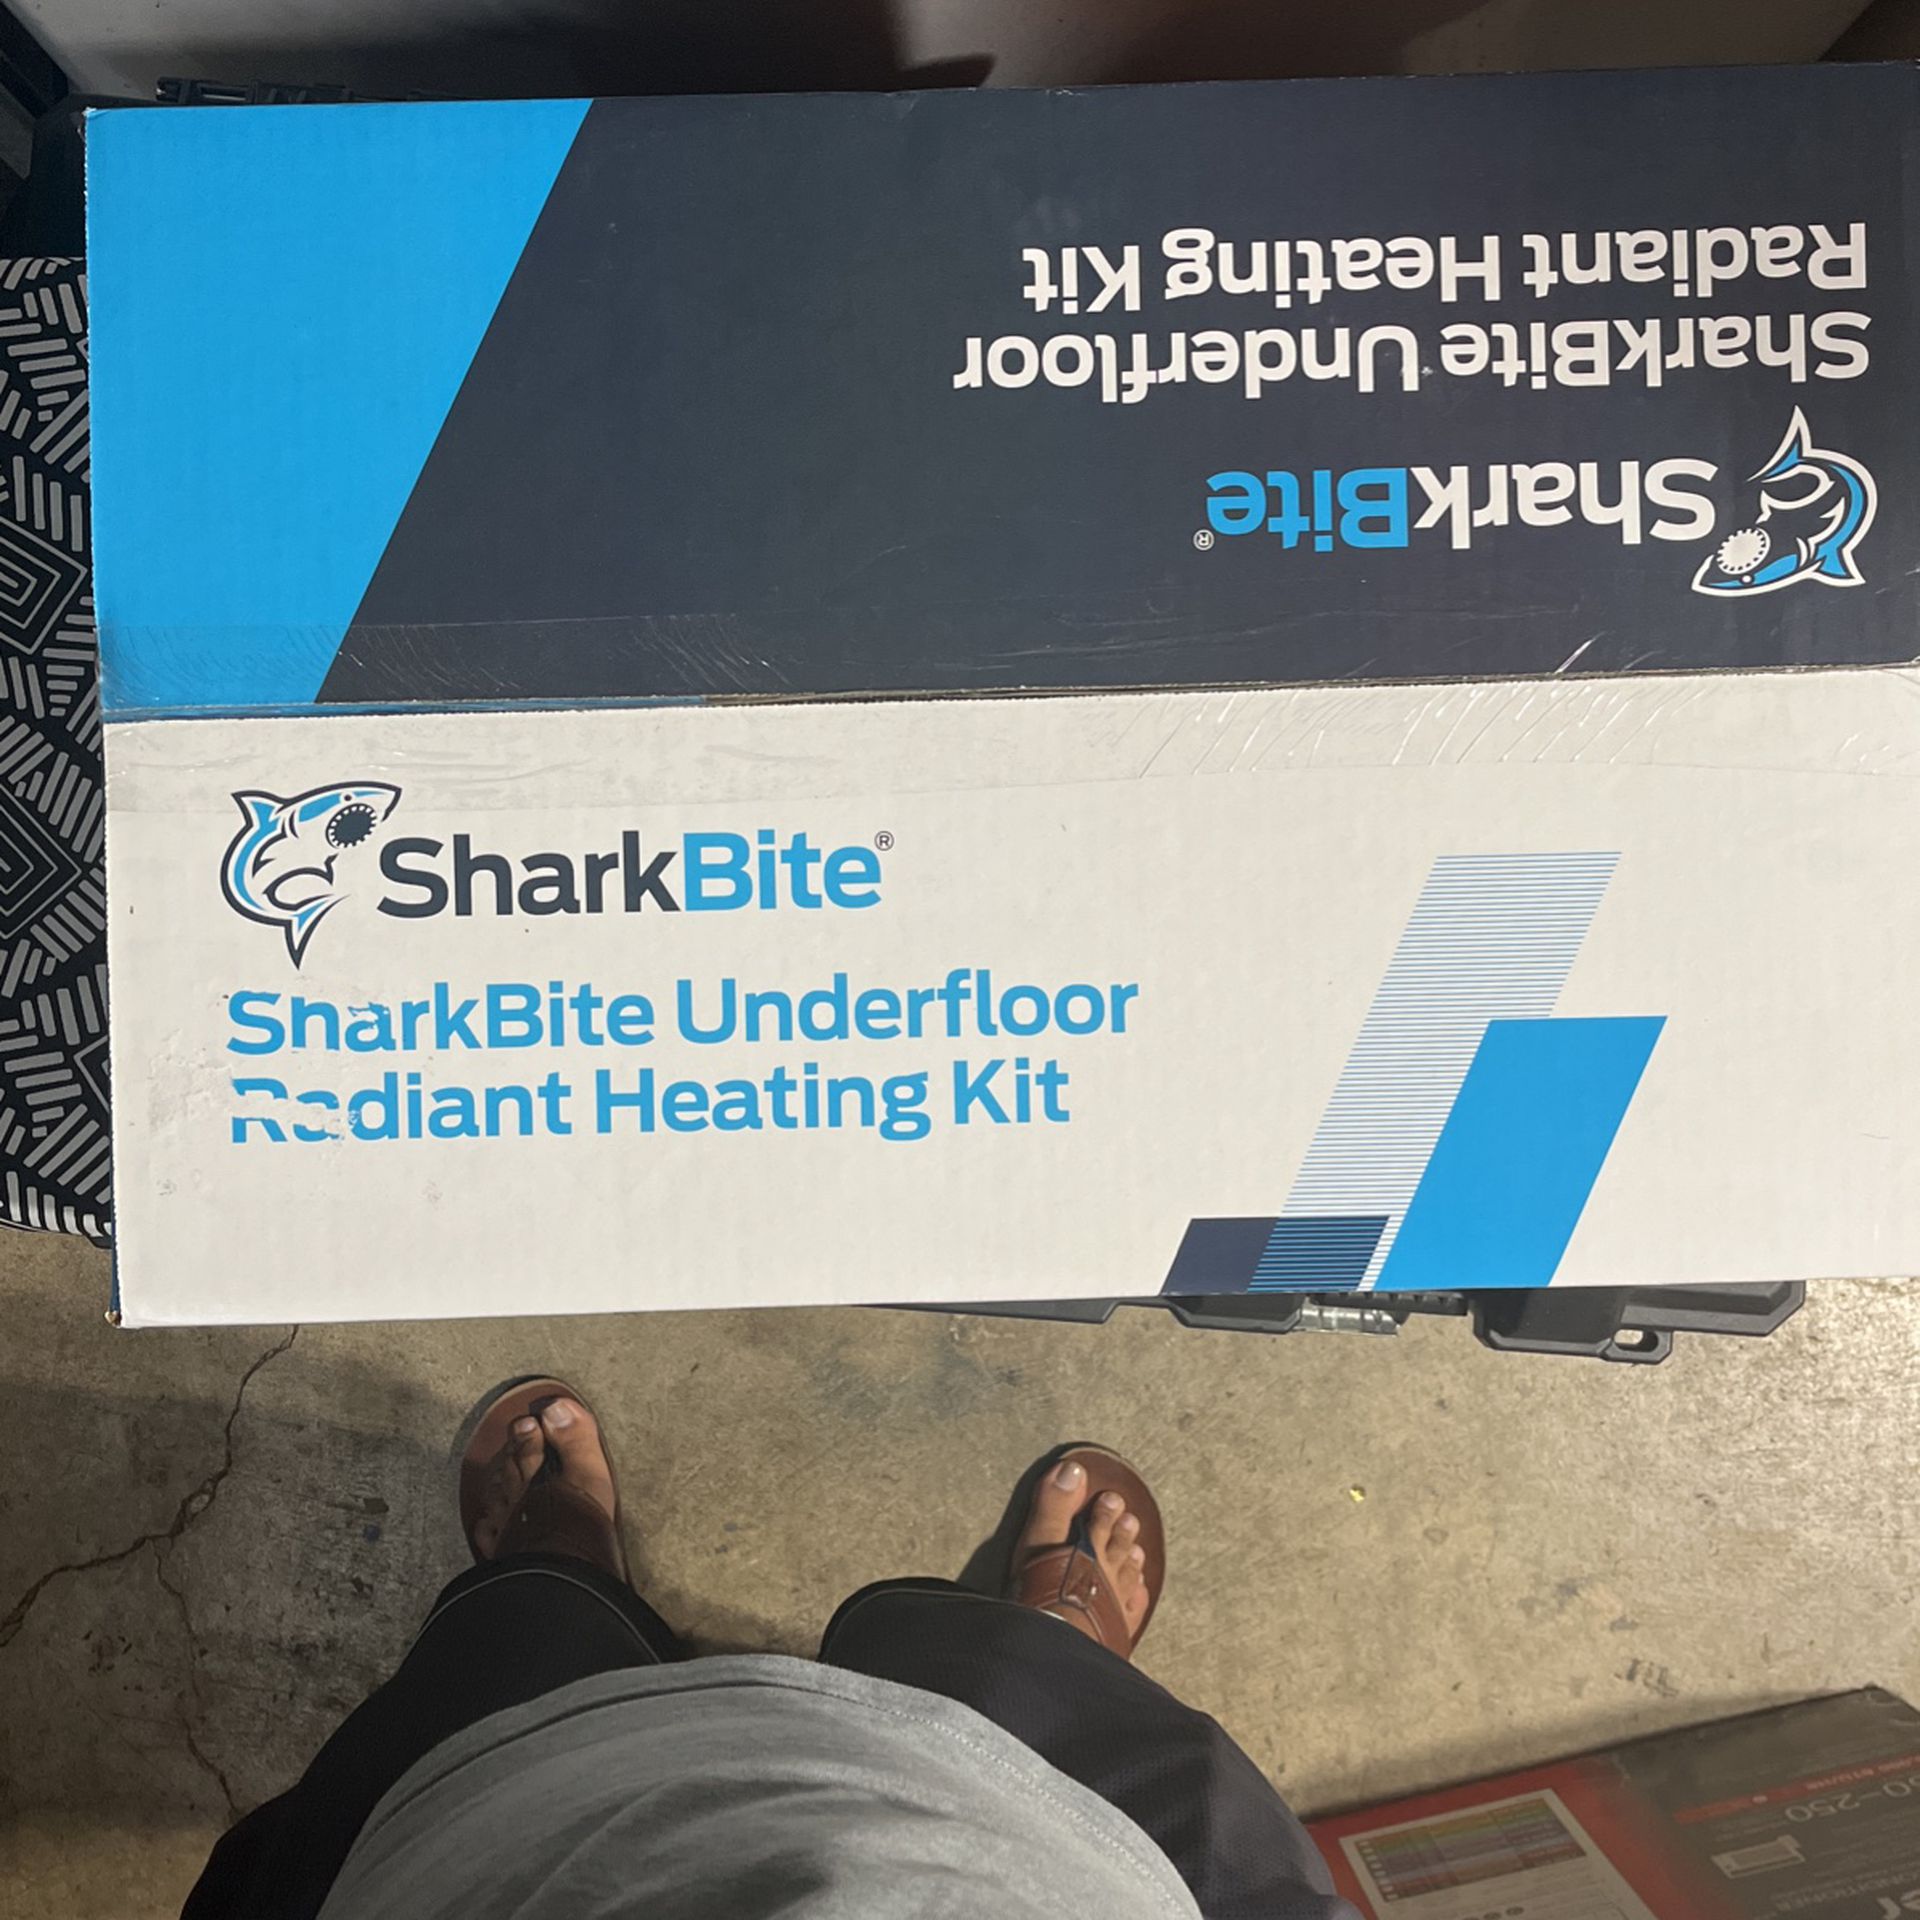 Shark bite Underfloor Radiant Heating Kit